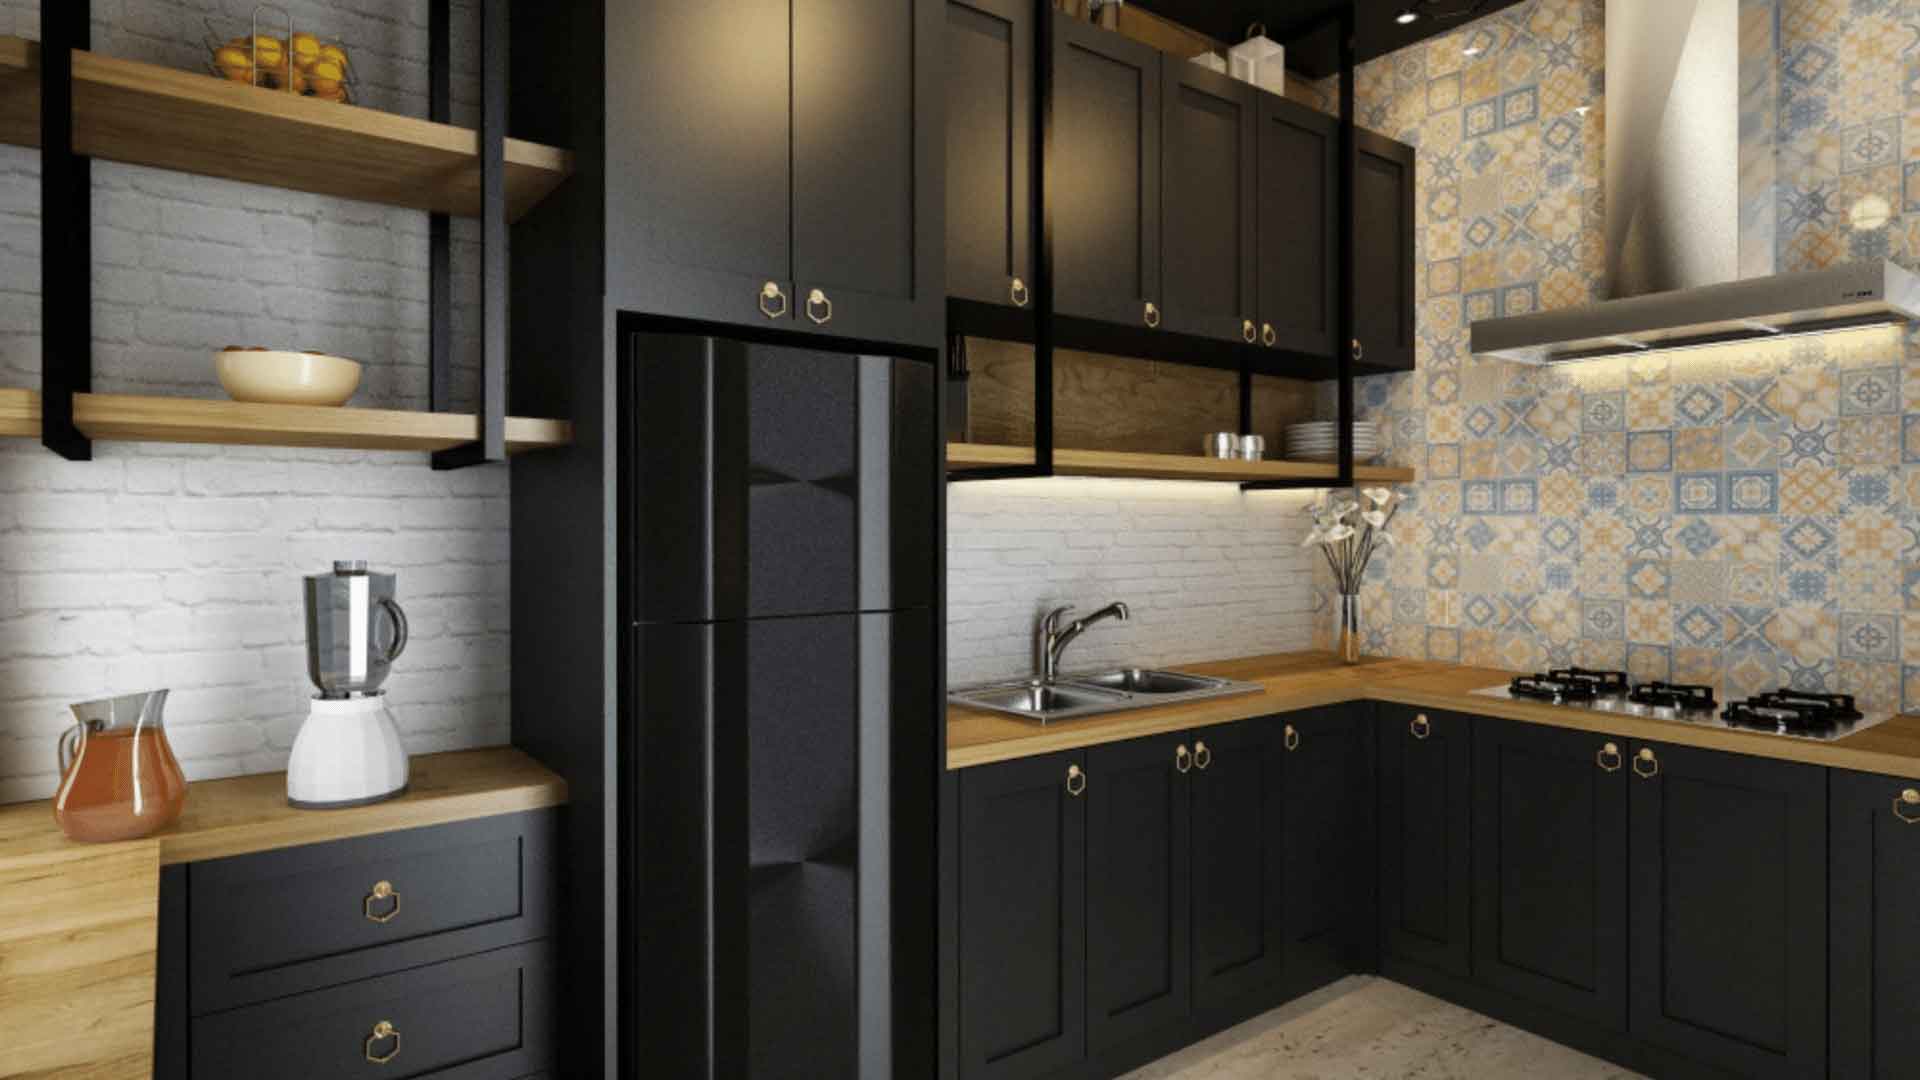 Our kitchen cabinet designs Atlanta